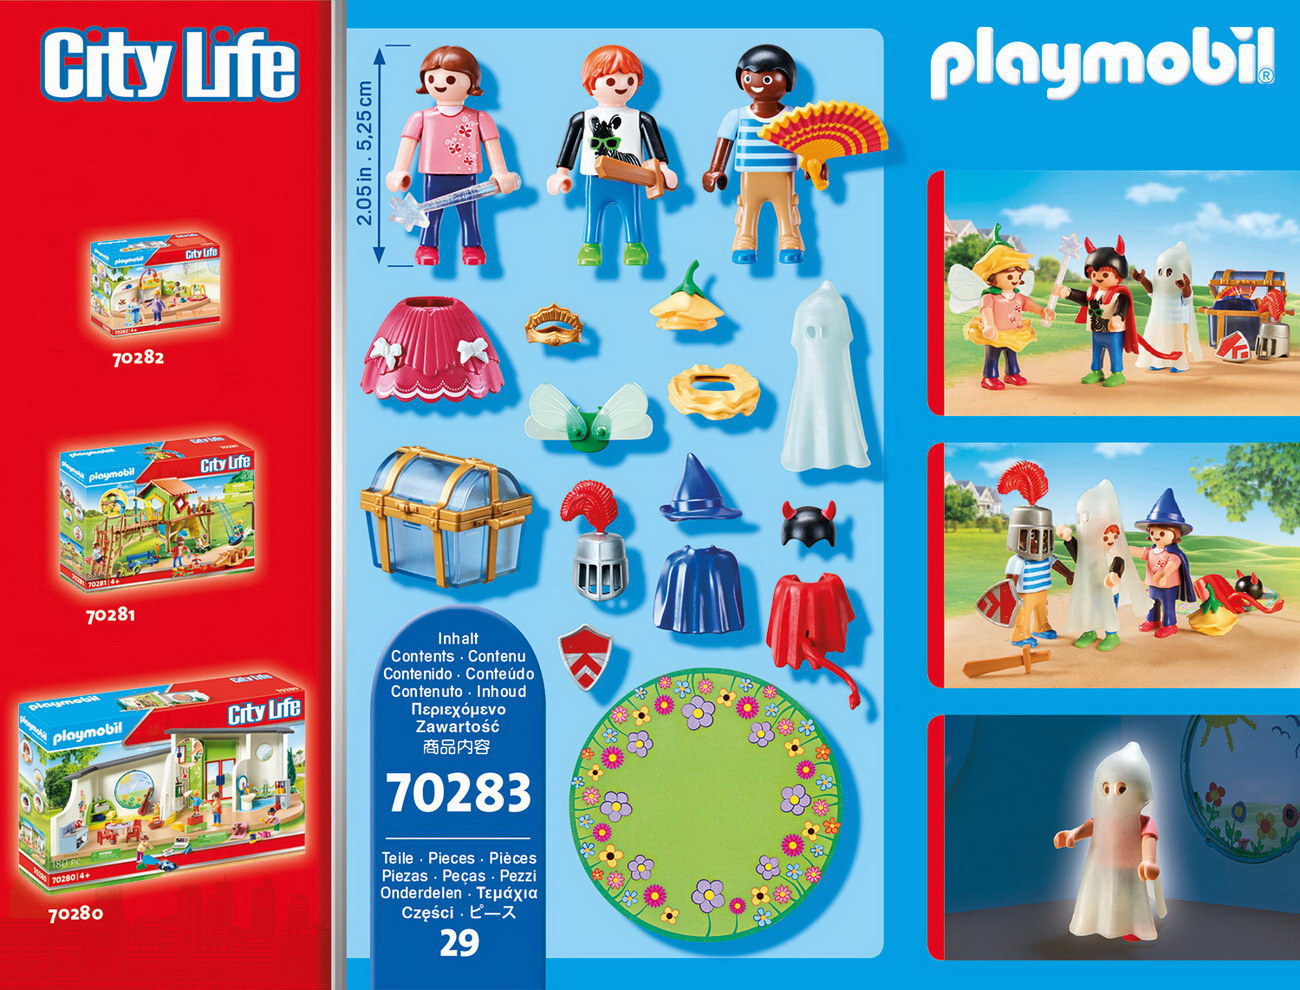 Playmobil 70283 - Kinder mit Verkleidungskiste - City Life